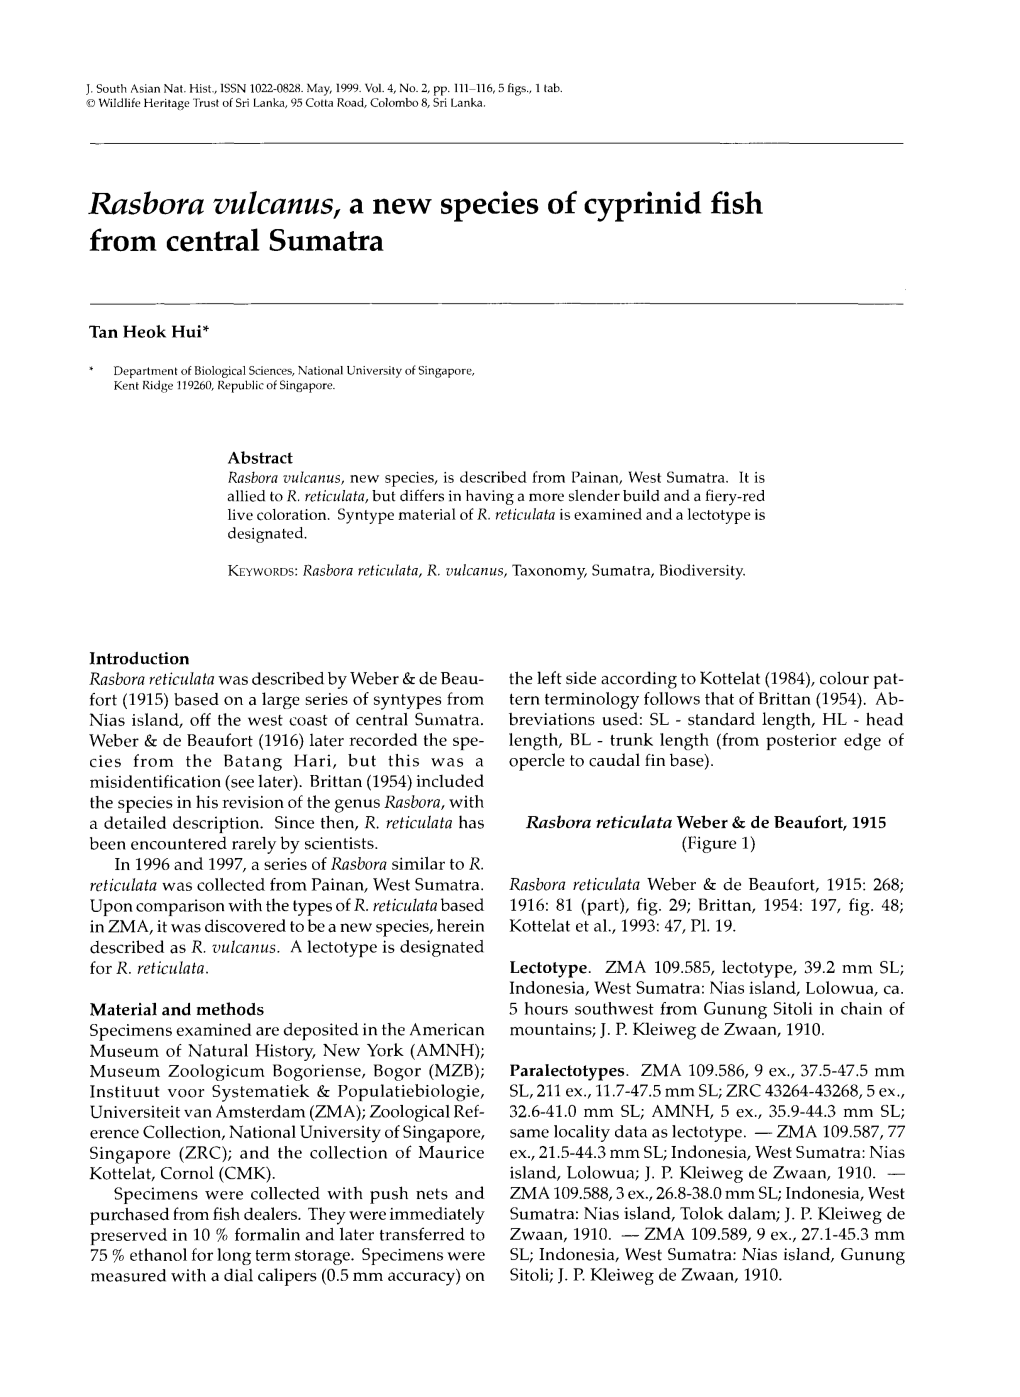 Rasbora Vulcanus, a New Species of Cyprinid Fish from Central Sumatra